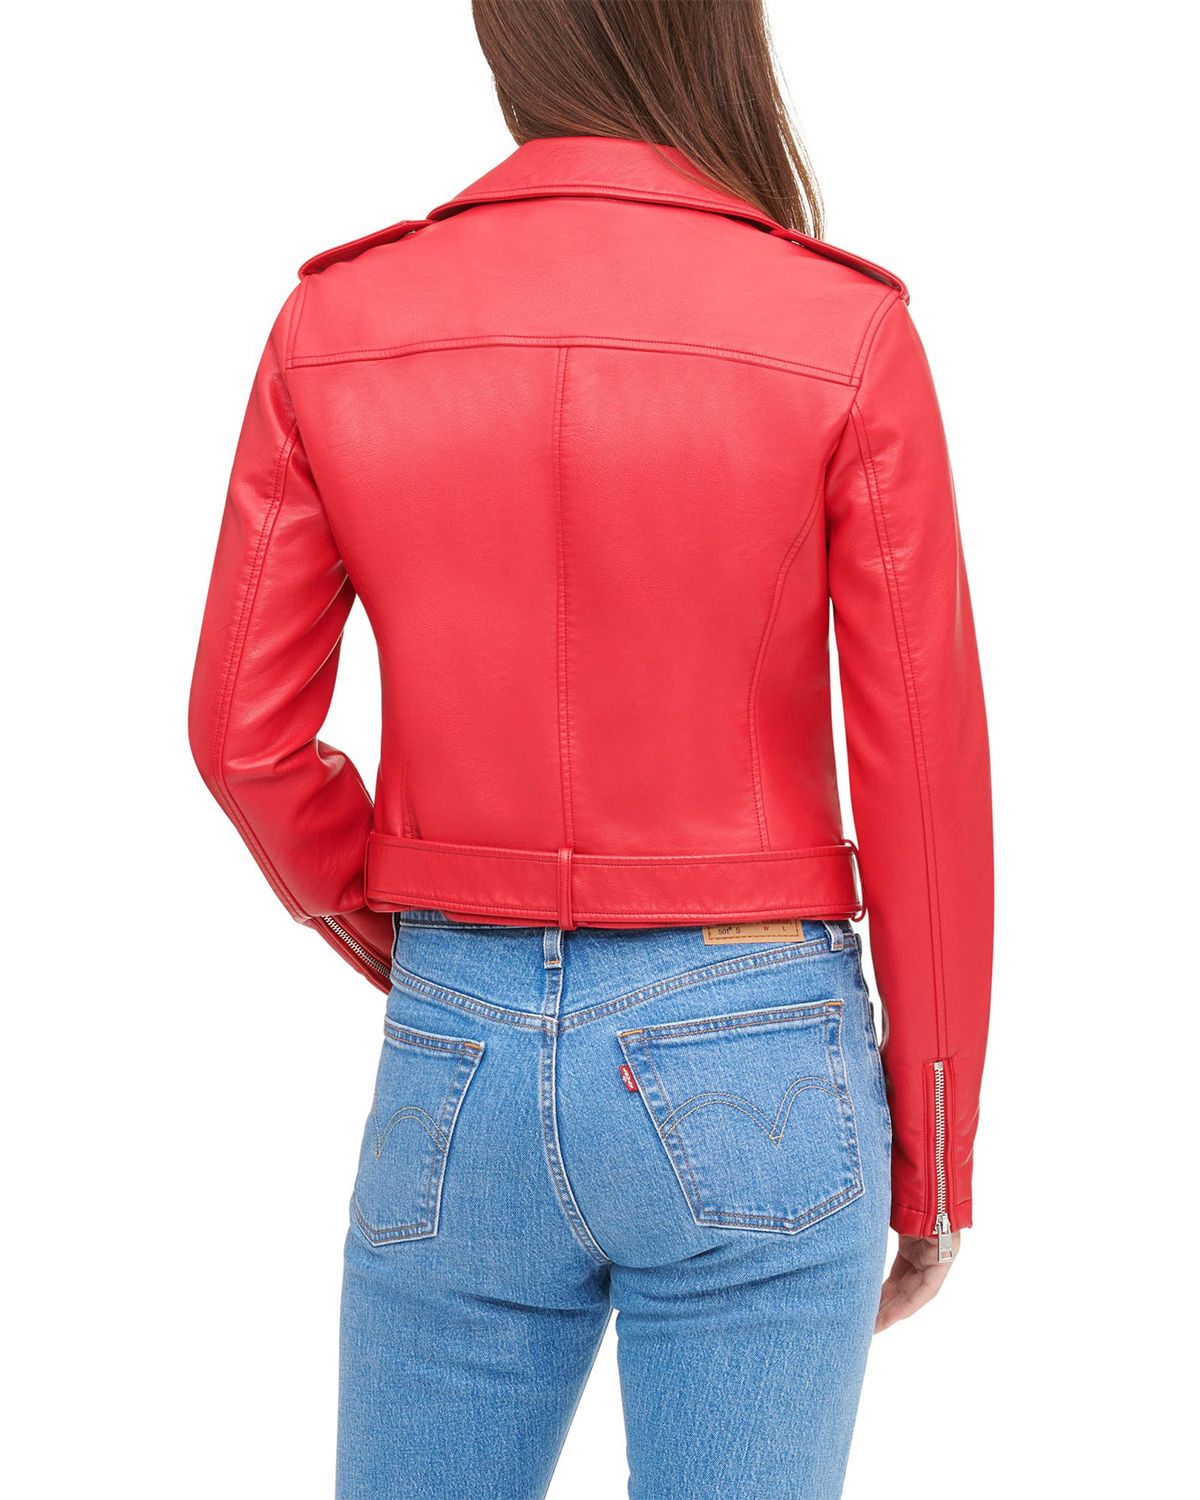 Women's Short Red Biker Leather Jacket